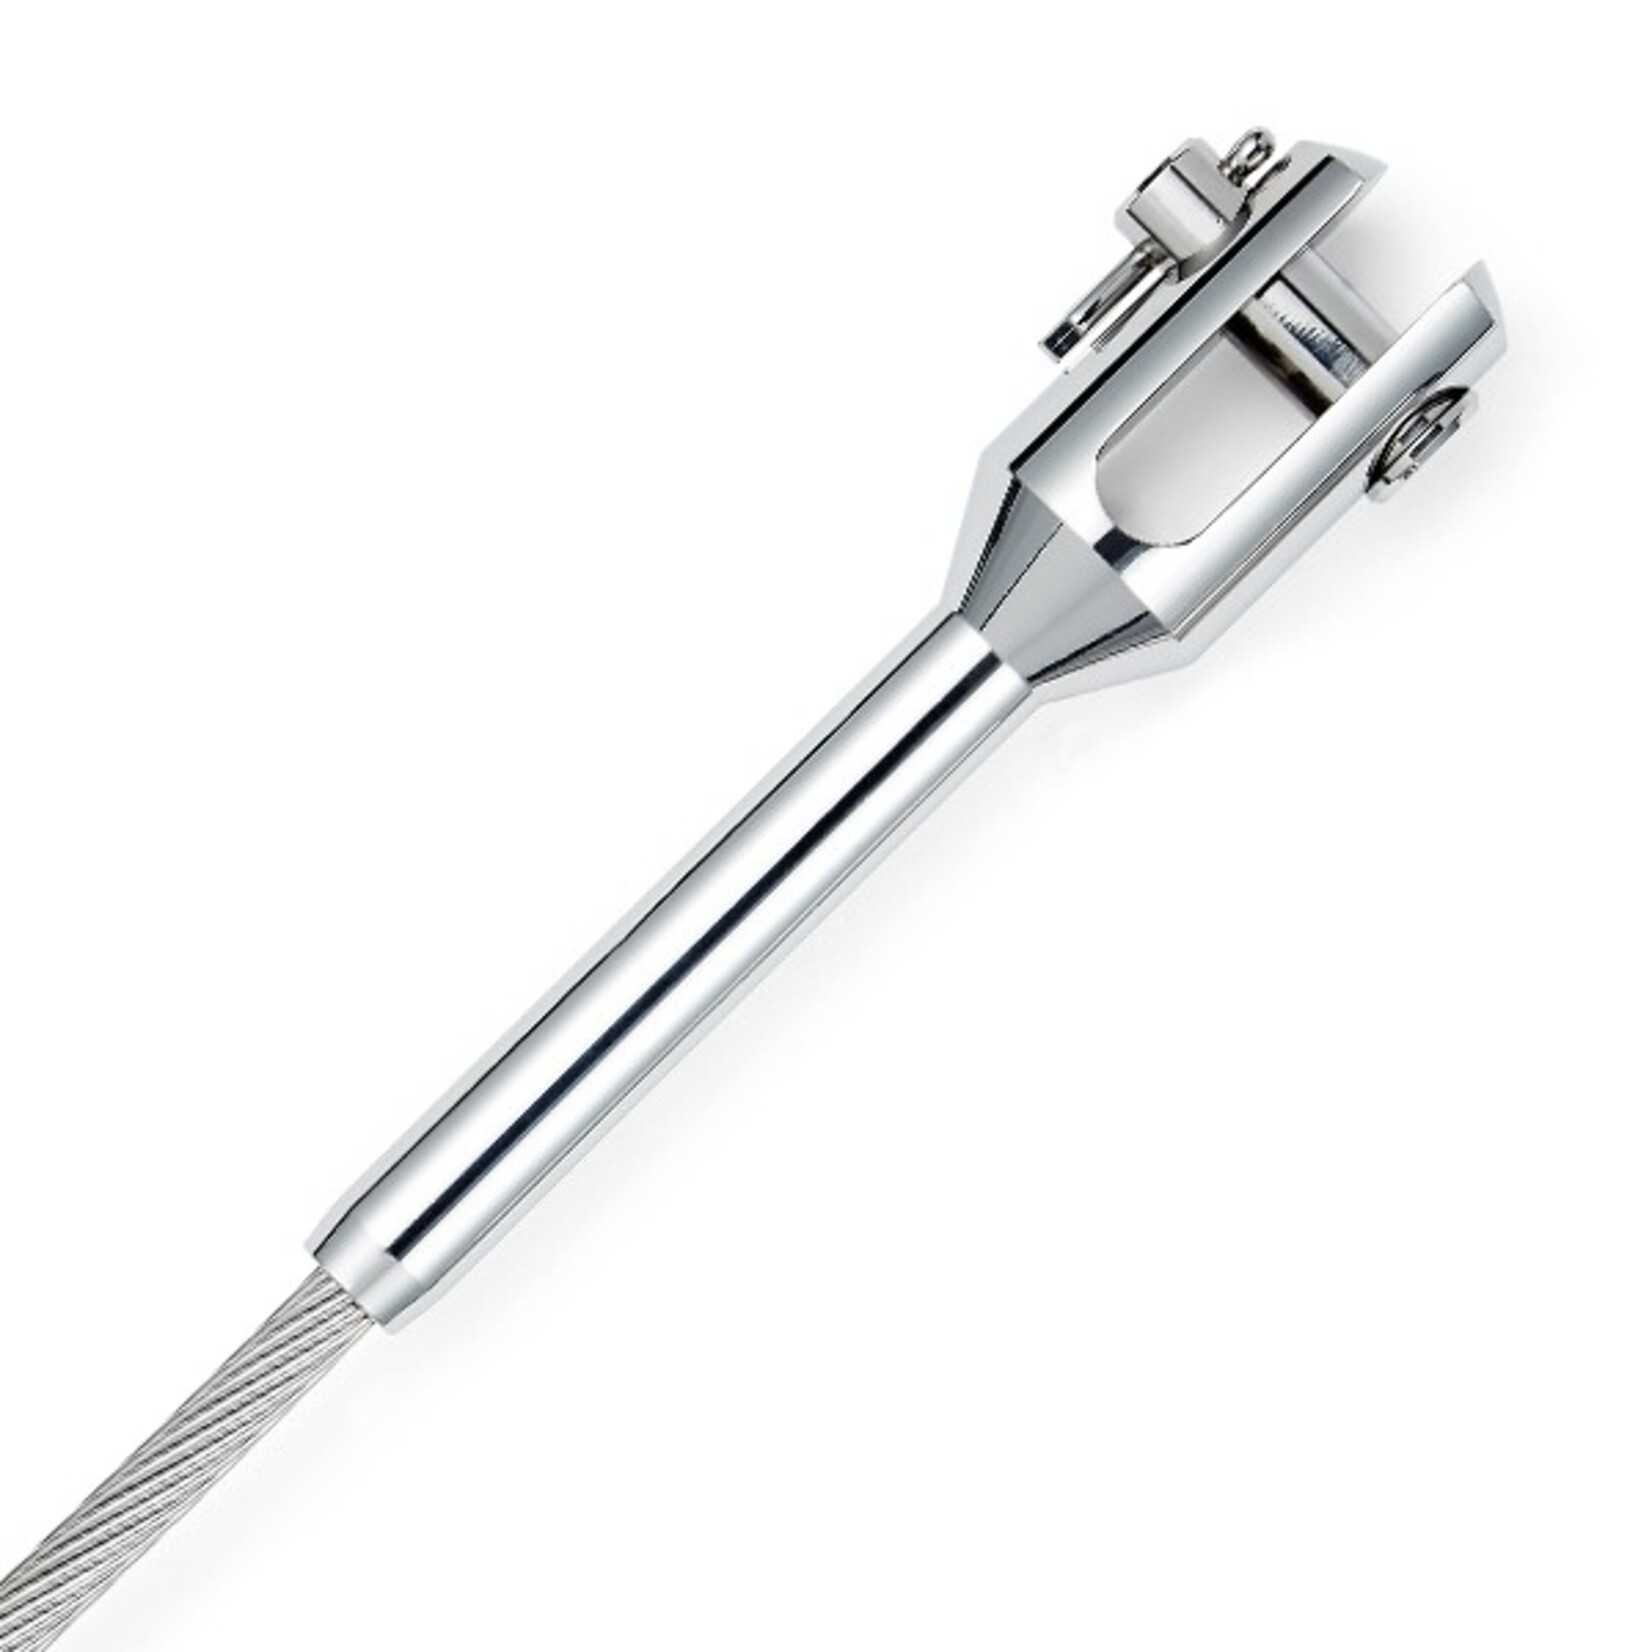 STA-LOK Swage fork  7mm. machined